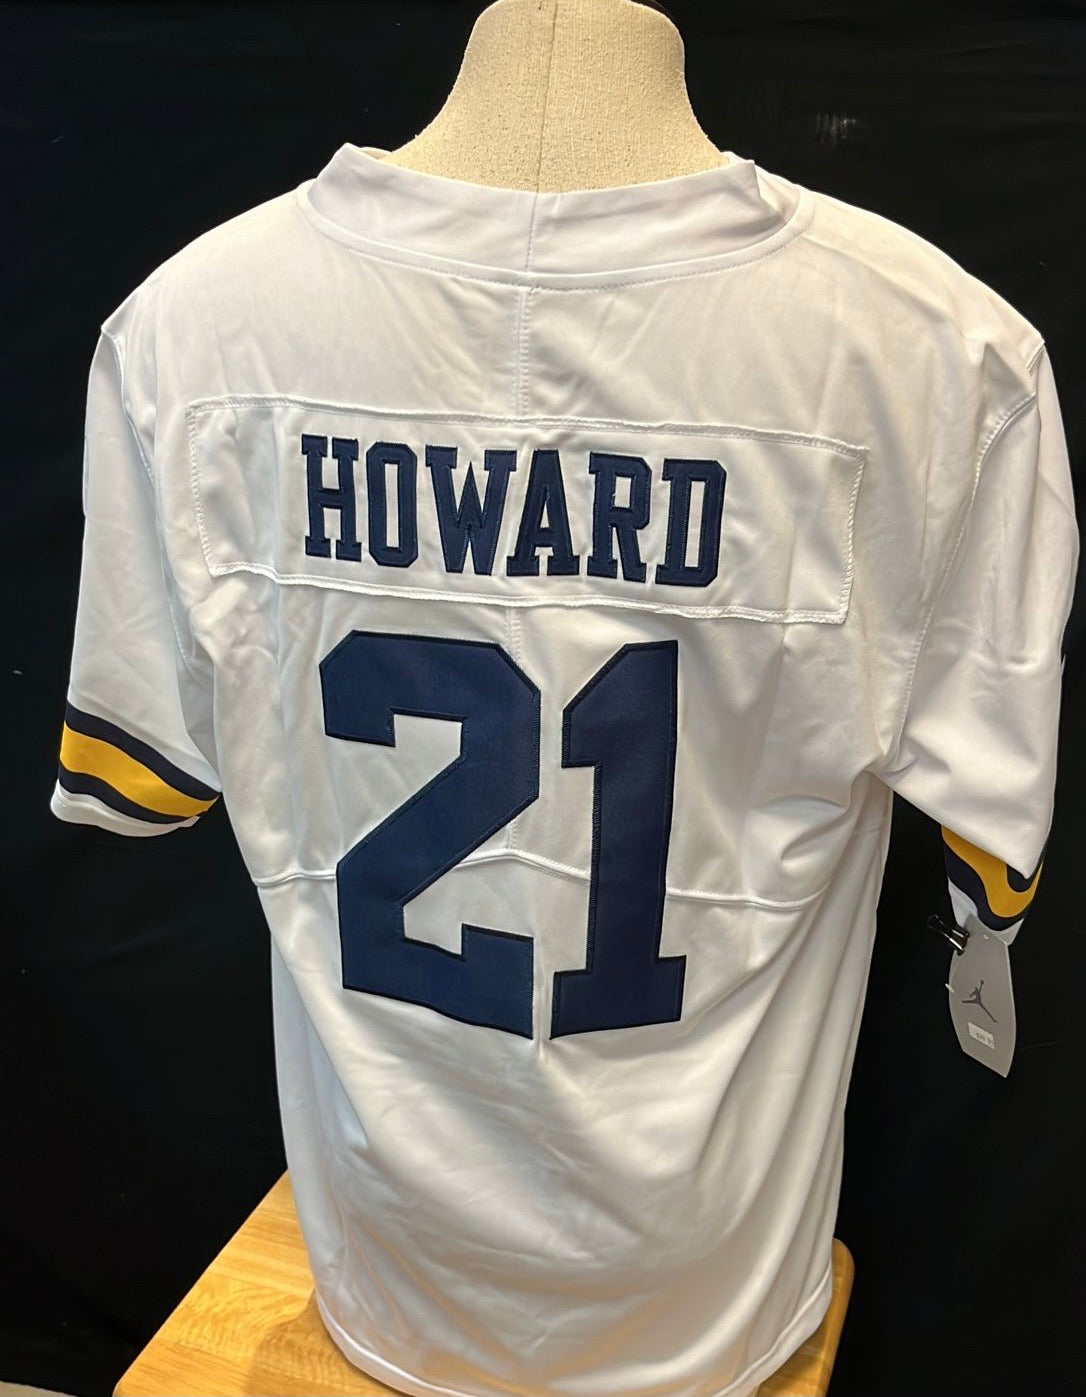 howard signed jersey